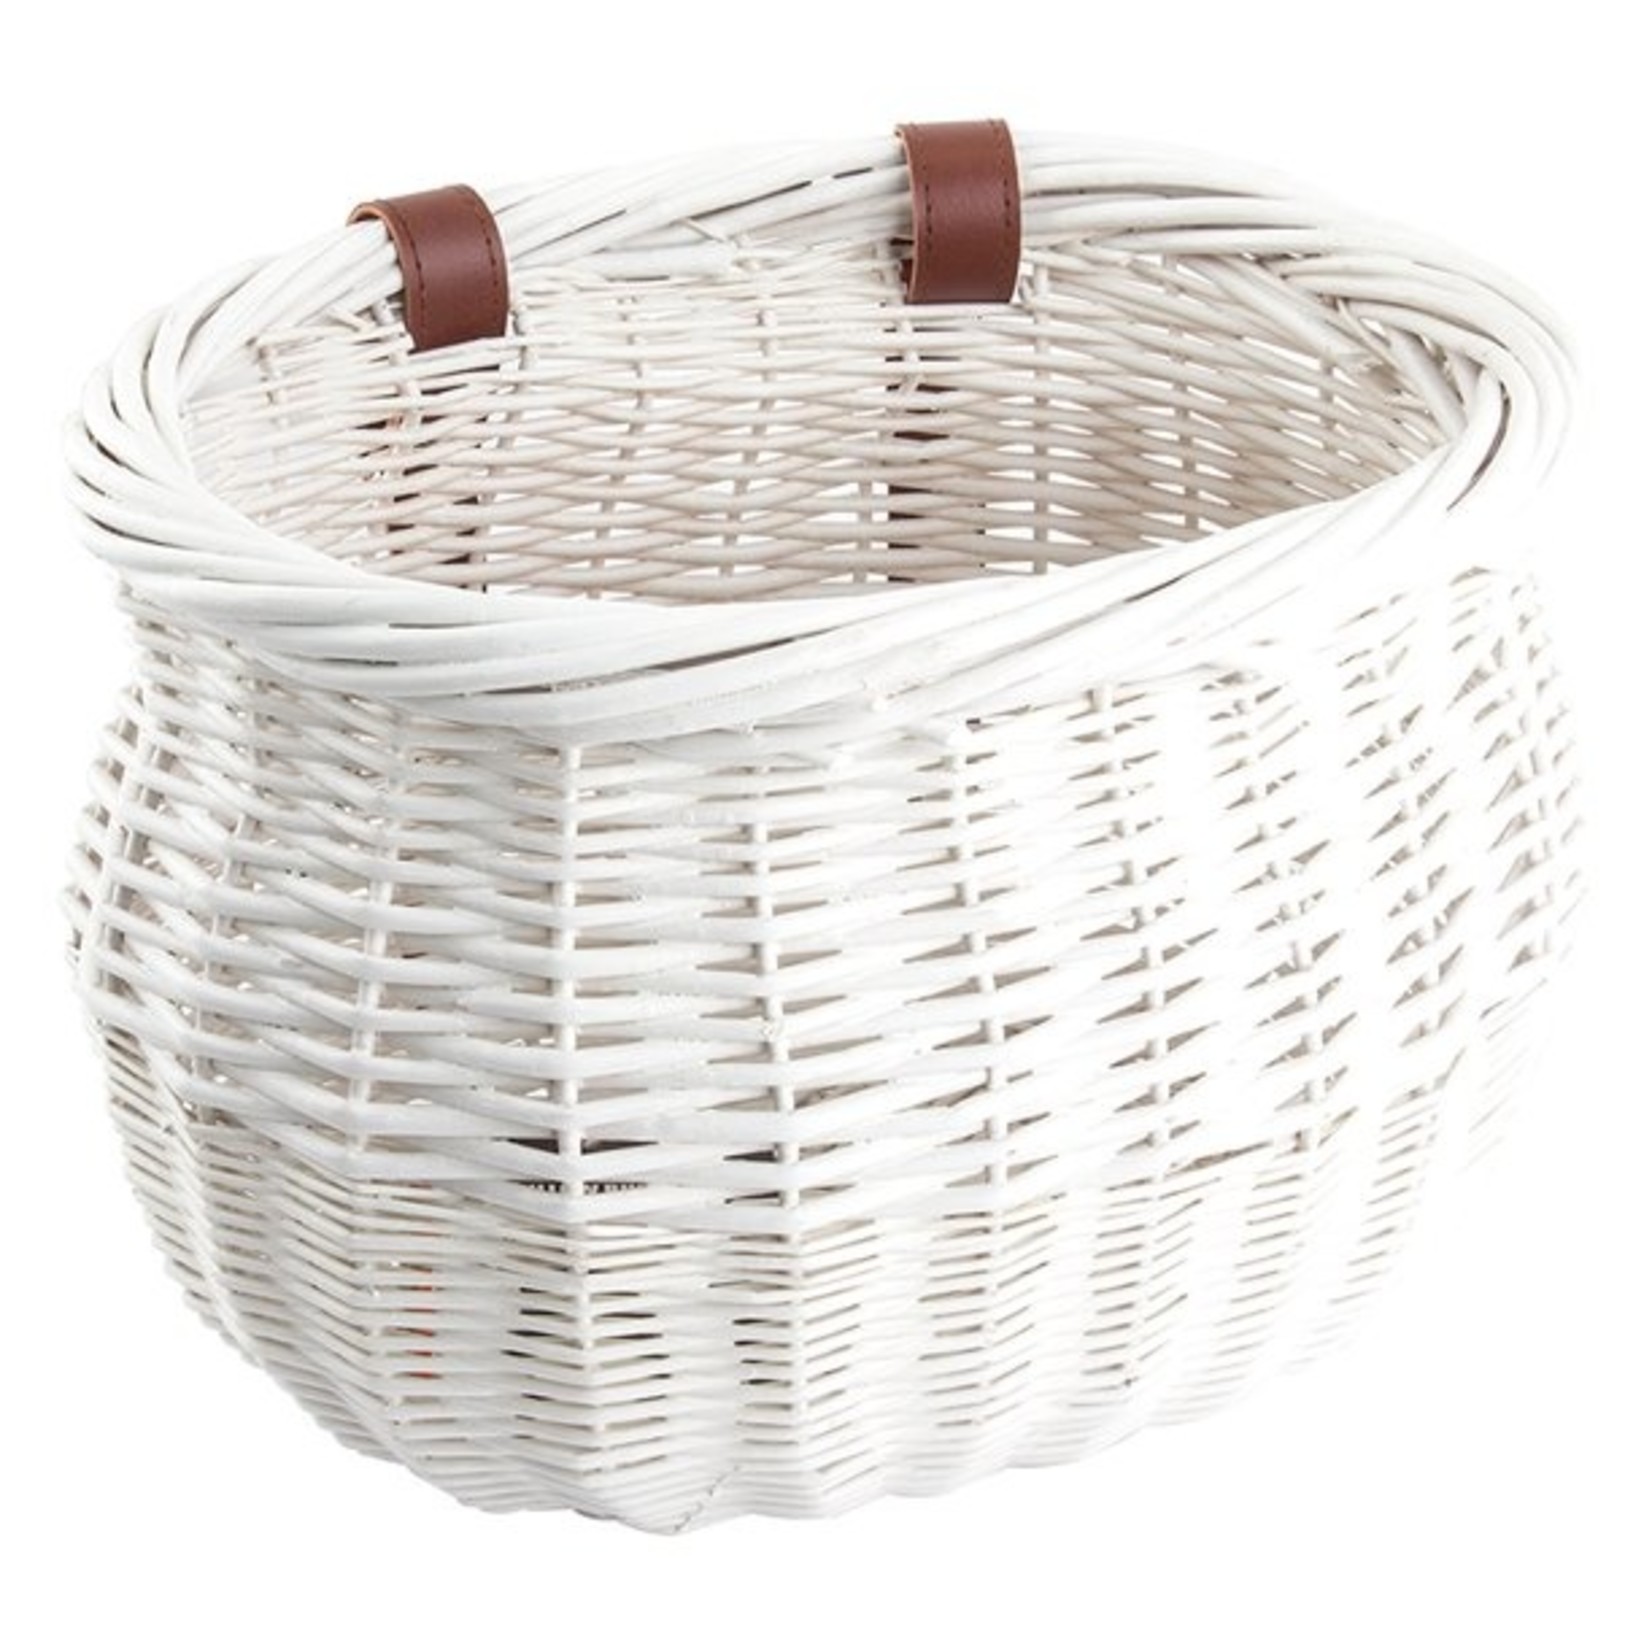 SunLite Willow Bushel Front Basket Strap-on Wht 13x8x9